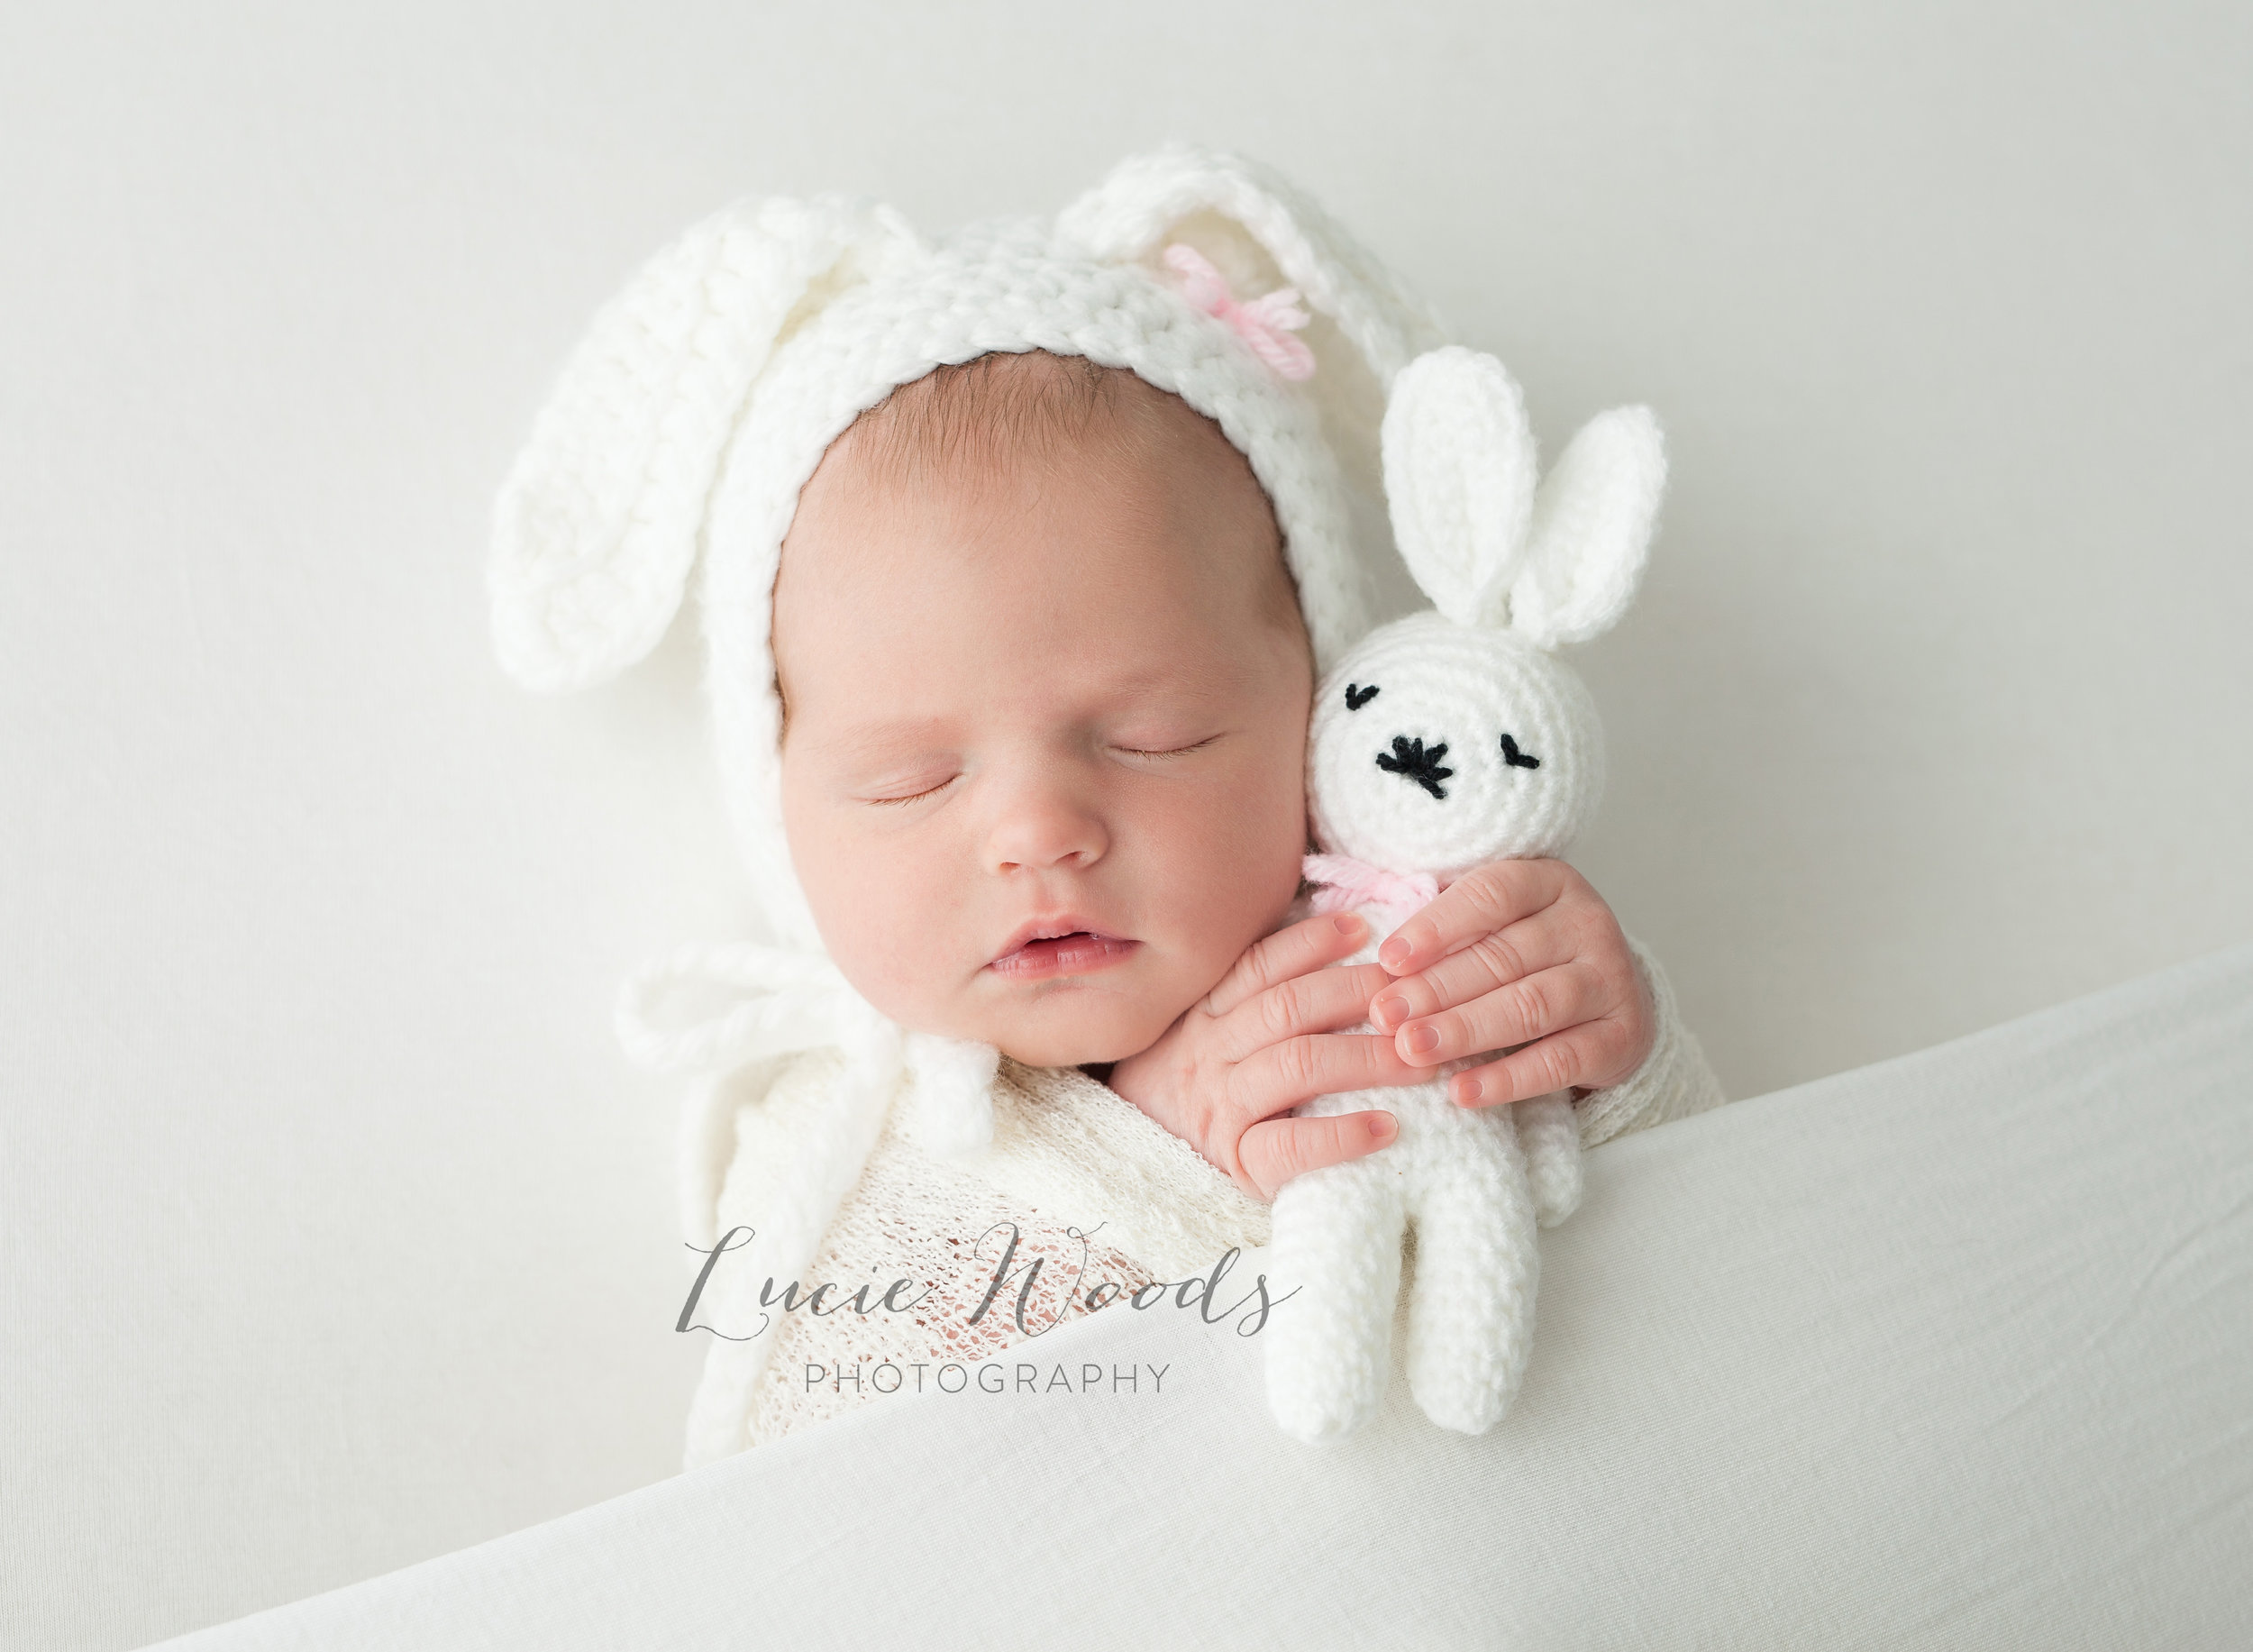 Newborn photographer baby photography cute baby photos photo Manchester Lancashire Ramsbottom Lucie Woods Photography Altrincham Hale